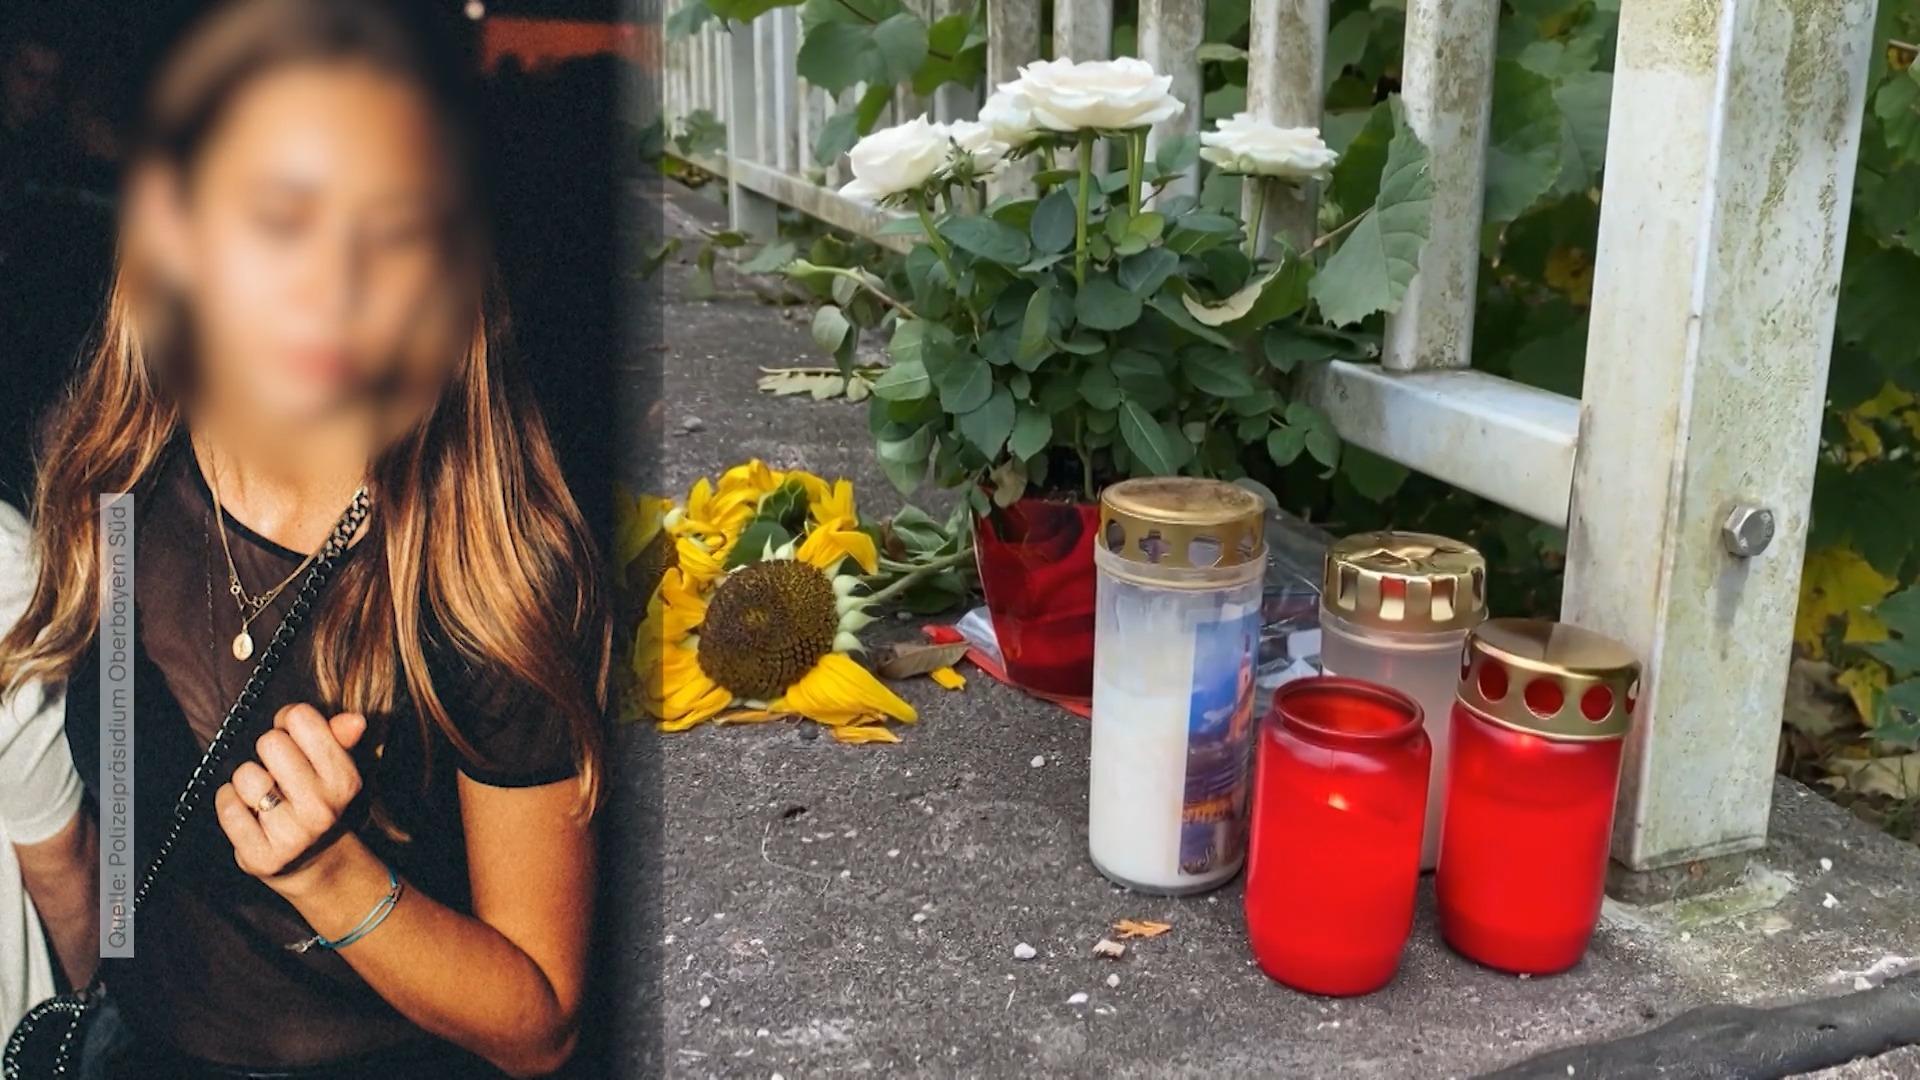 Mord an Hanna (23) - Kripo nimmt Verdächtigen fest Aschau im Chiemgau